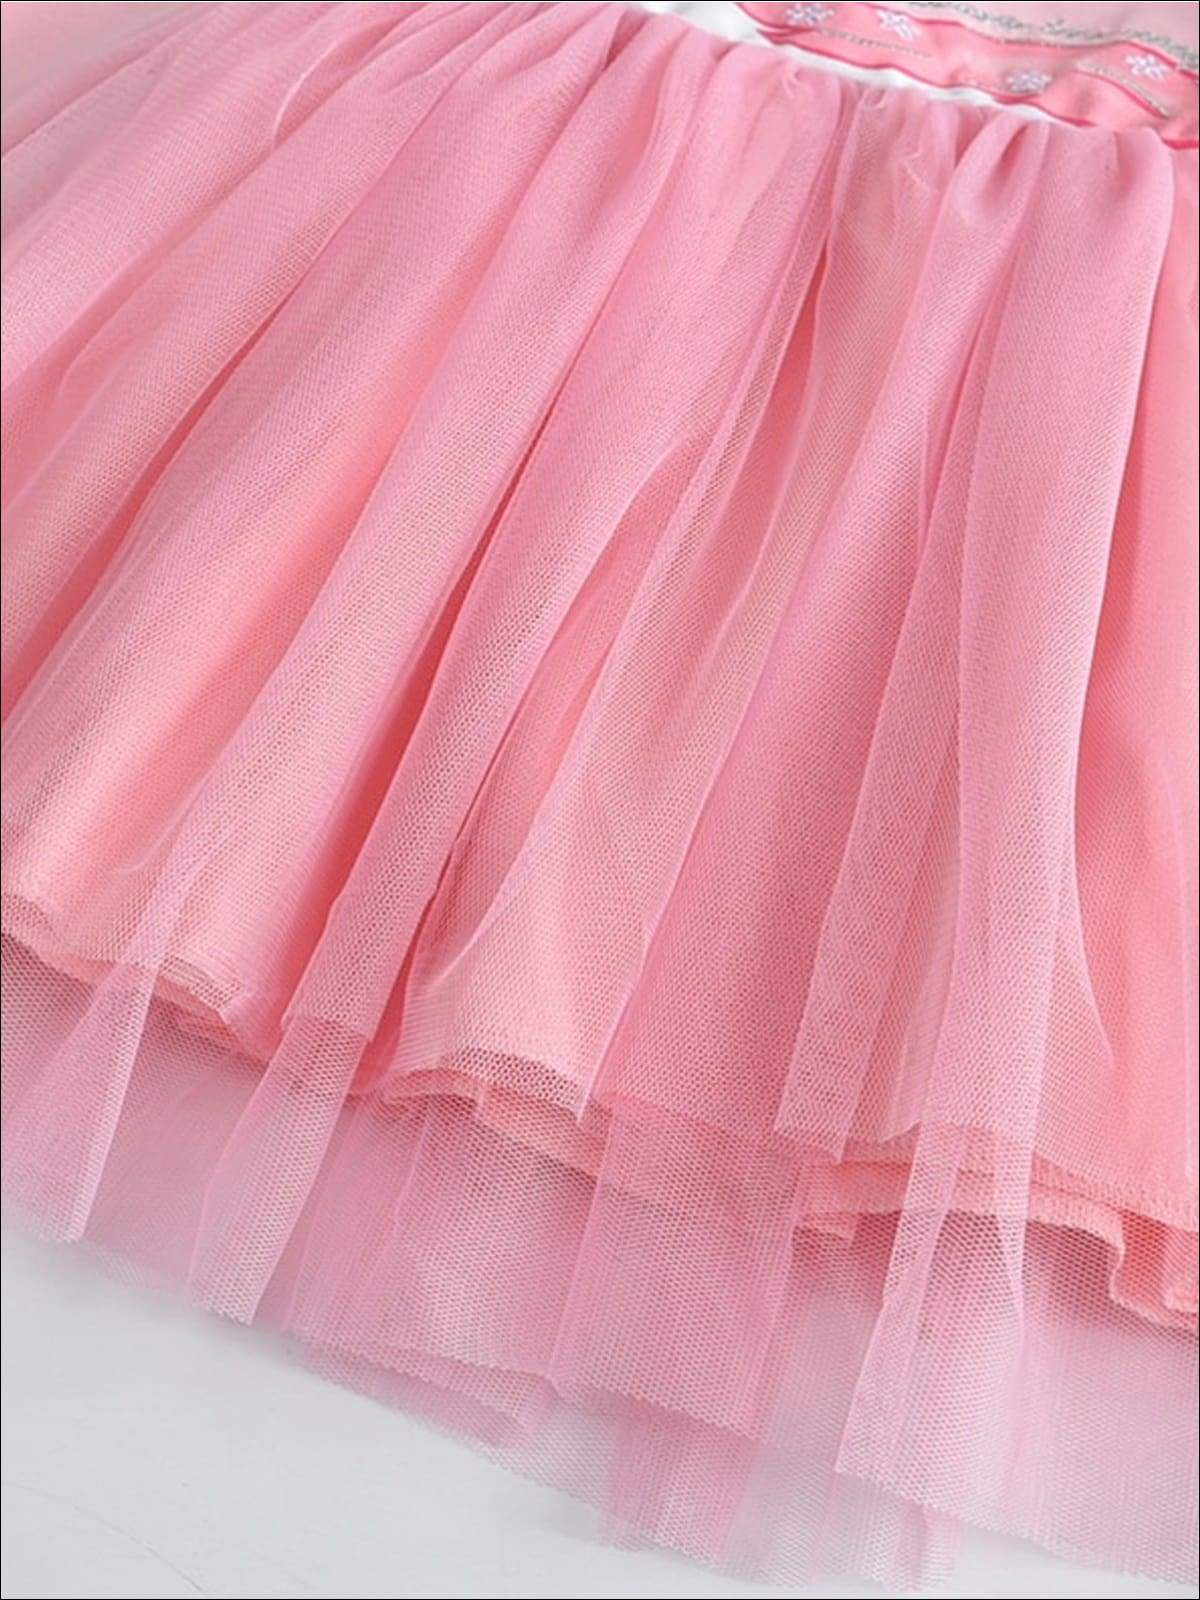 Girls Pink Dress | Unicorn Princess Tutu Dress | Mia Belle Girls